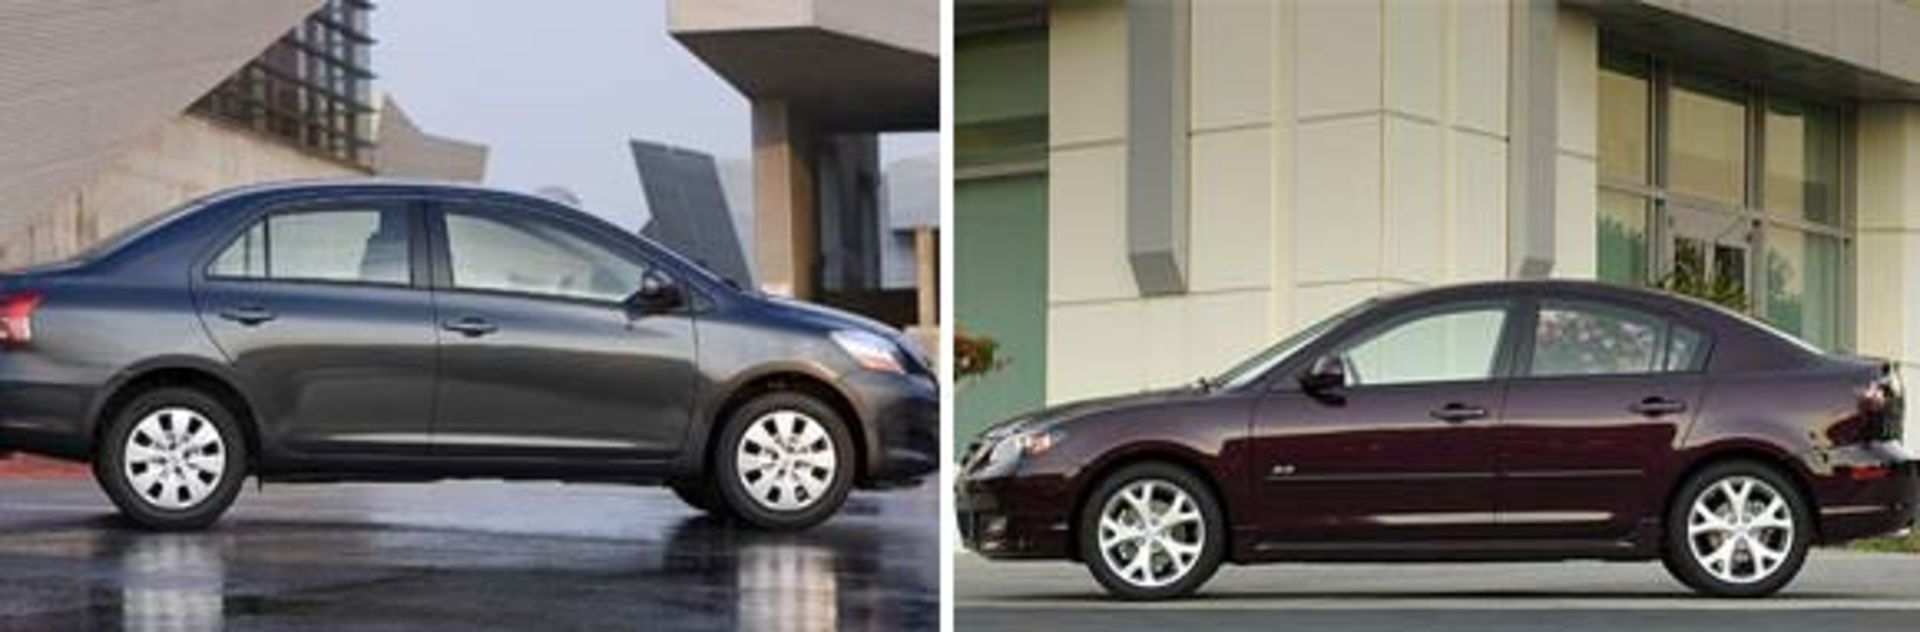 Mazda3-vs-yaris-sedan-2009-length